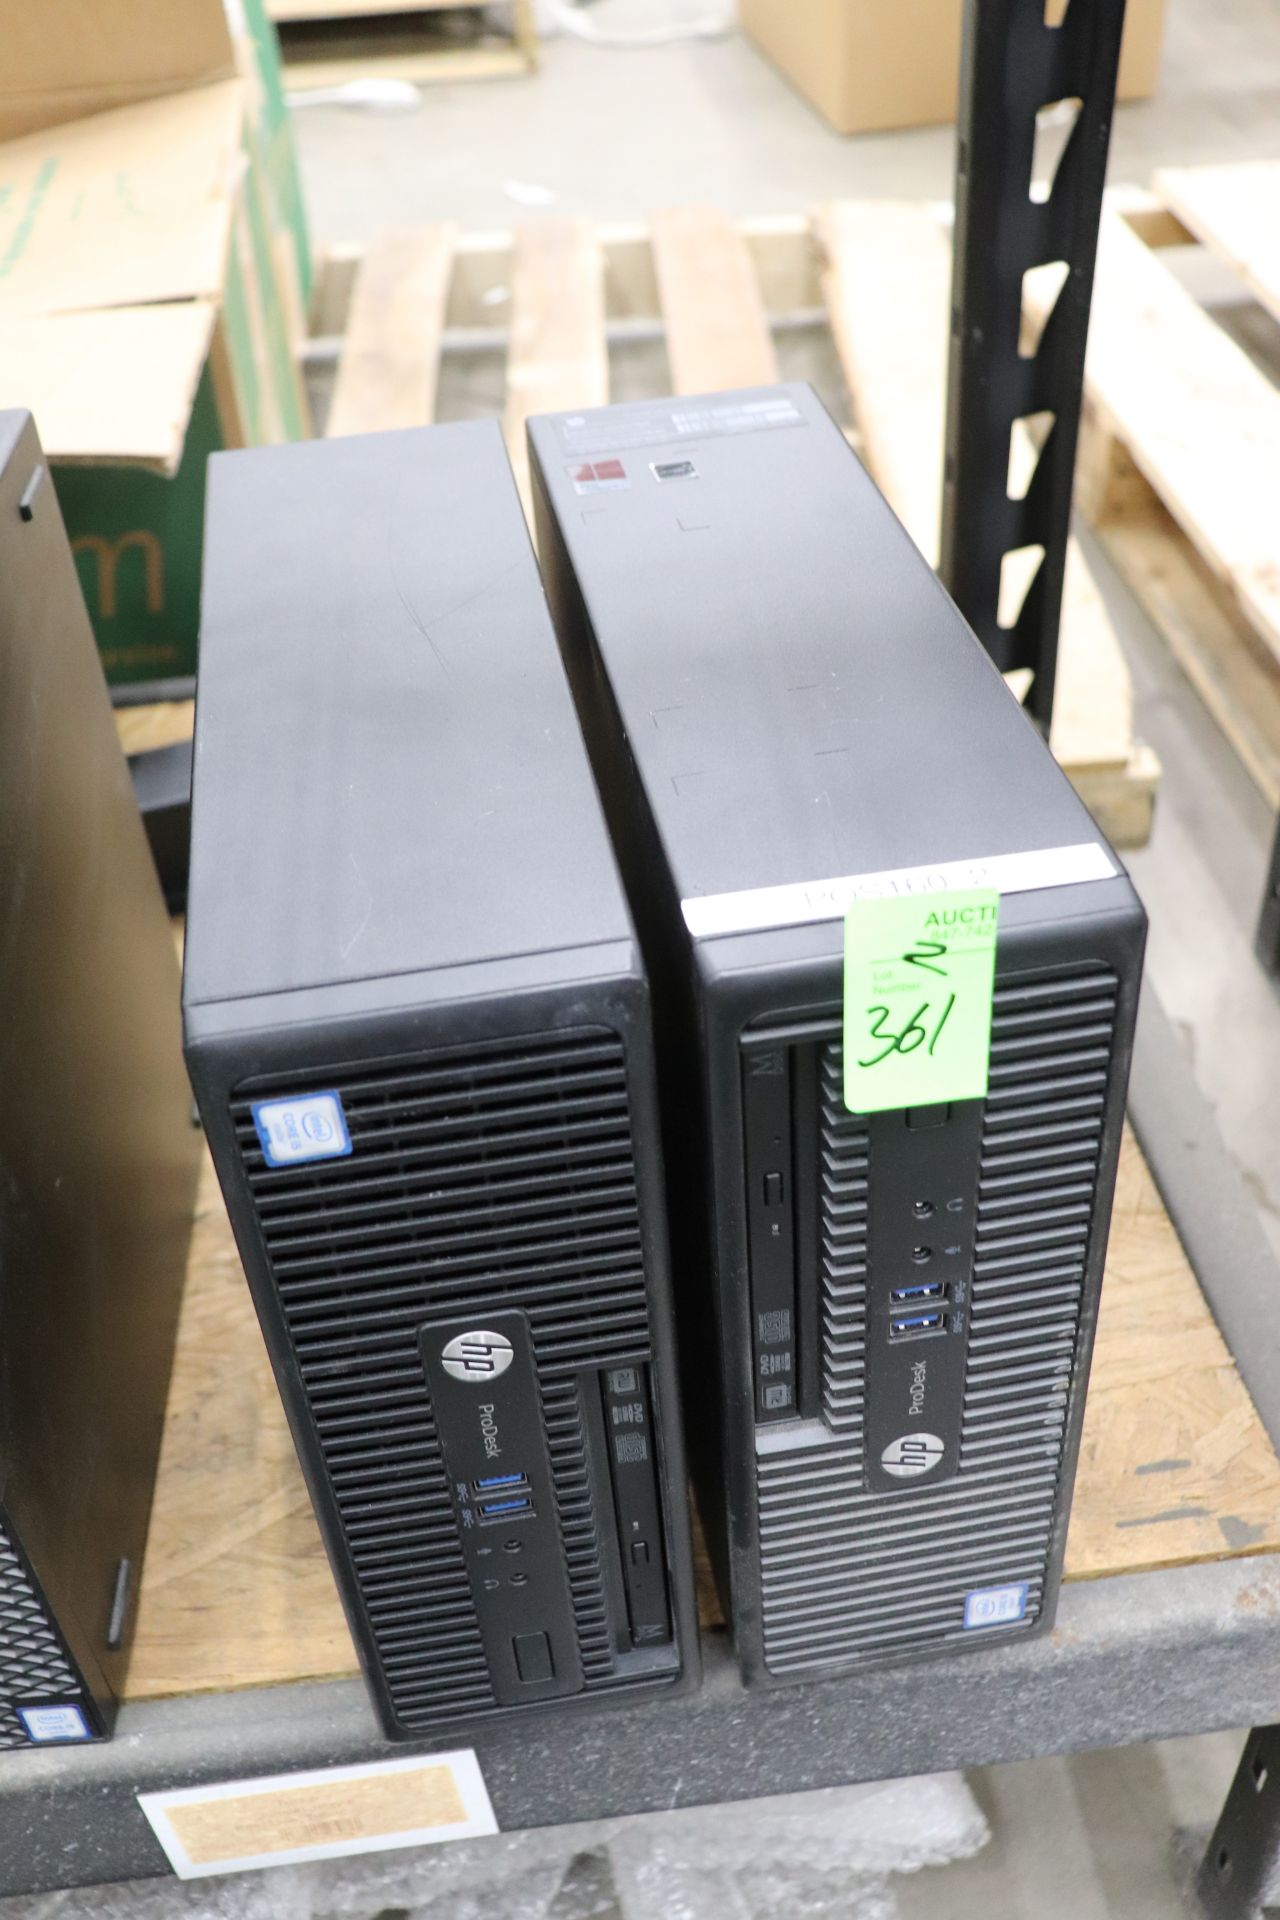 Two HP desktop computers, model ProDesk 400G3SFF Business